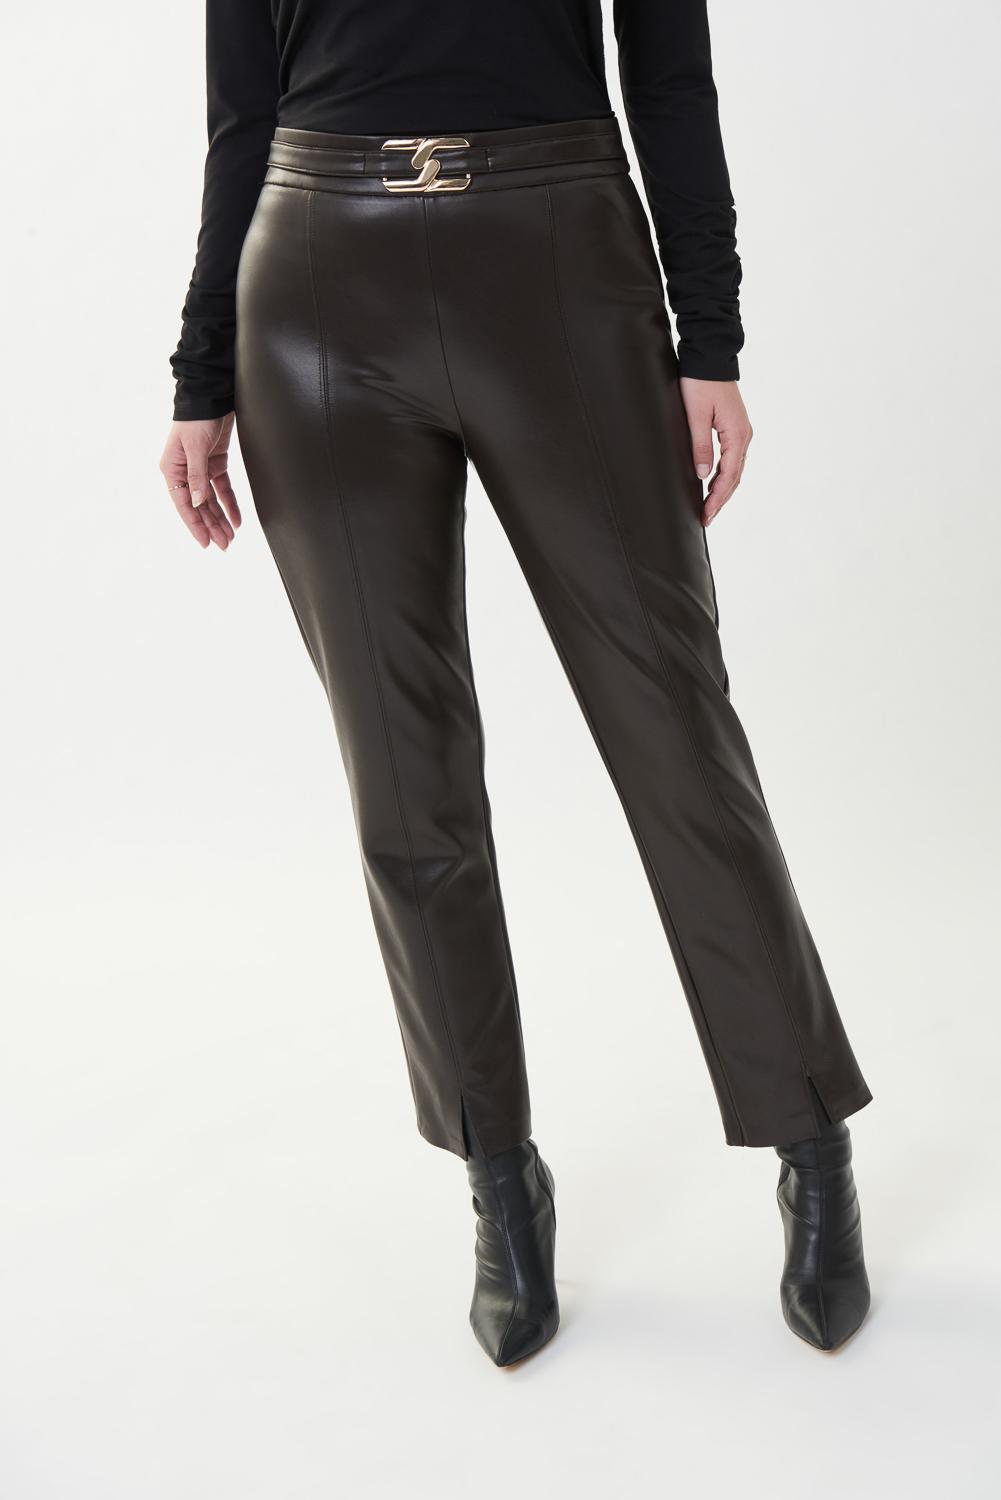 Joseph Ribkoff Black Faux-Leather Panel Leggings Style 233012